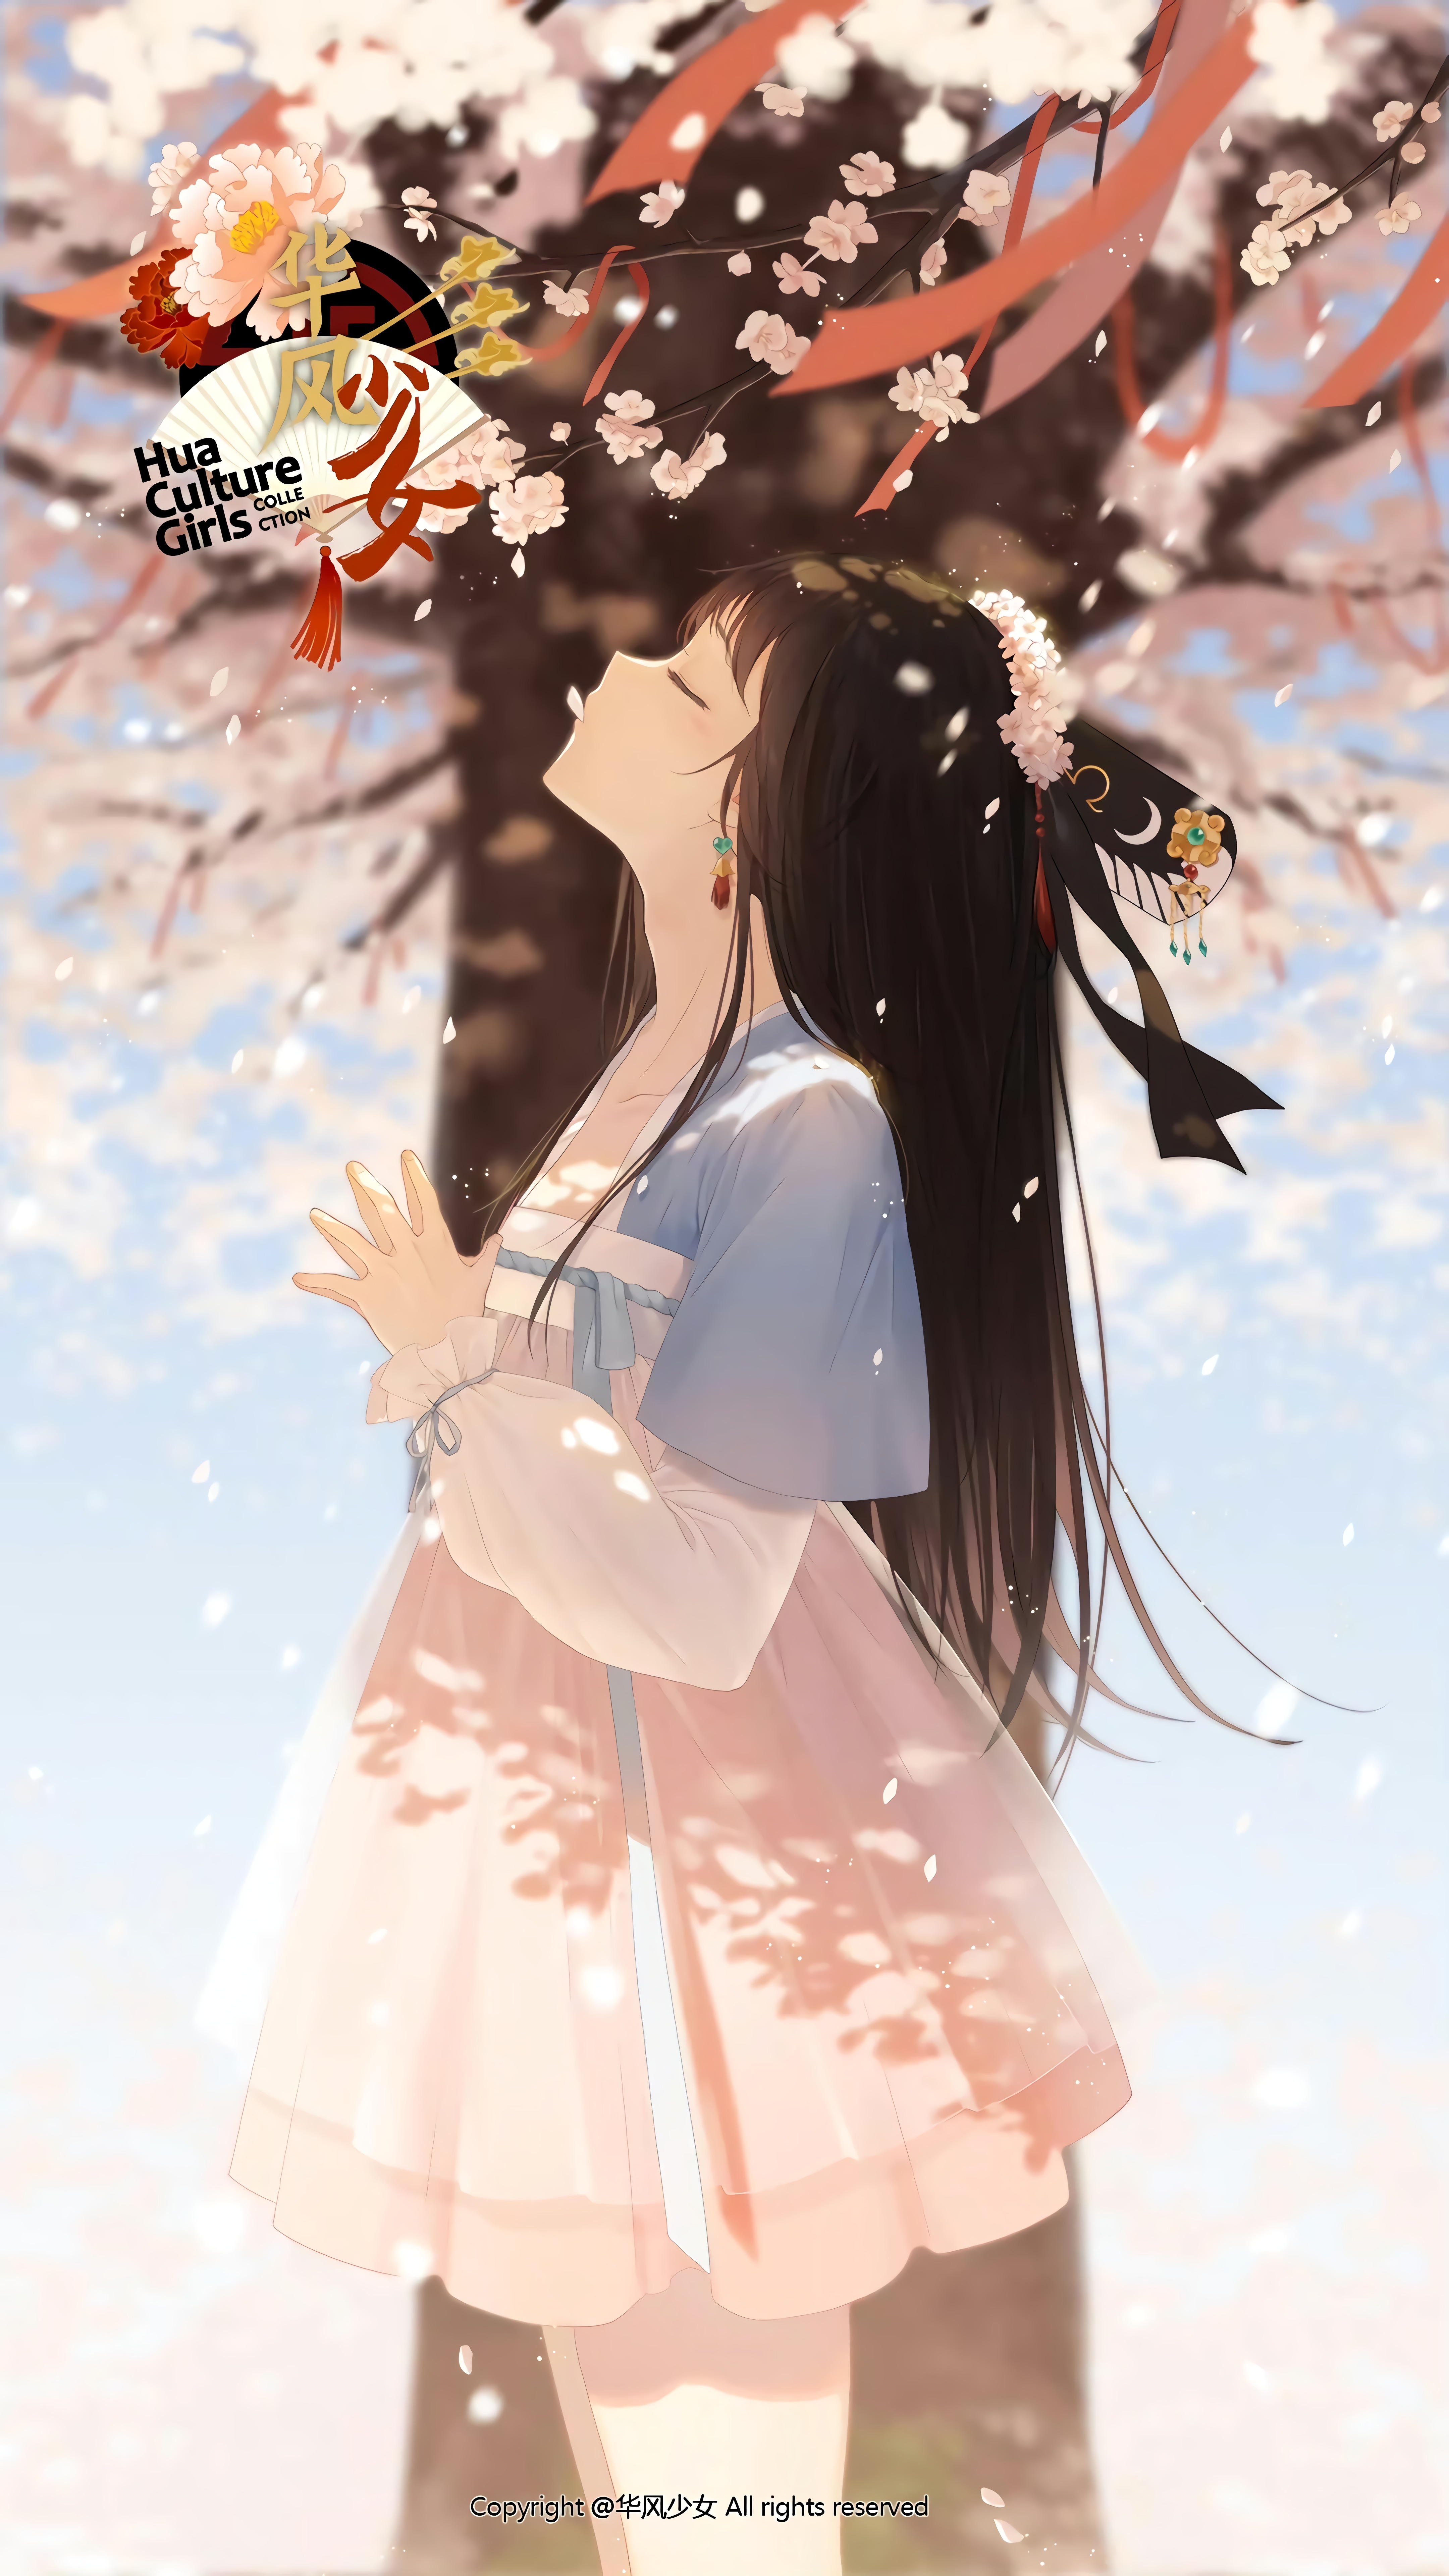 Girlish Number Han HyoJoo Closed Eyes Flowers Anime Girls Petals Flower In Hair 4320x7680